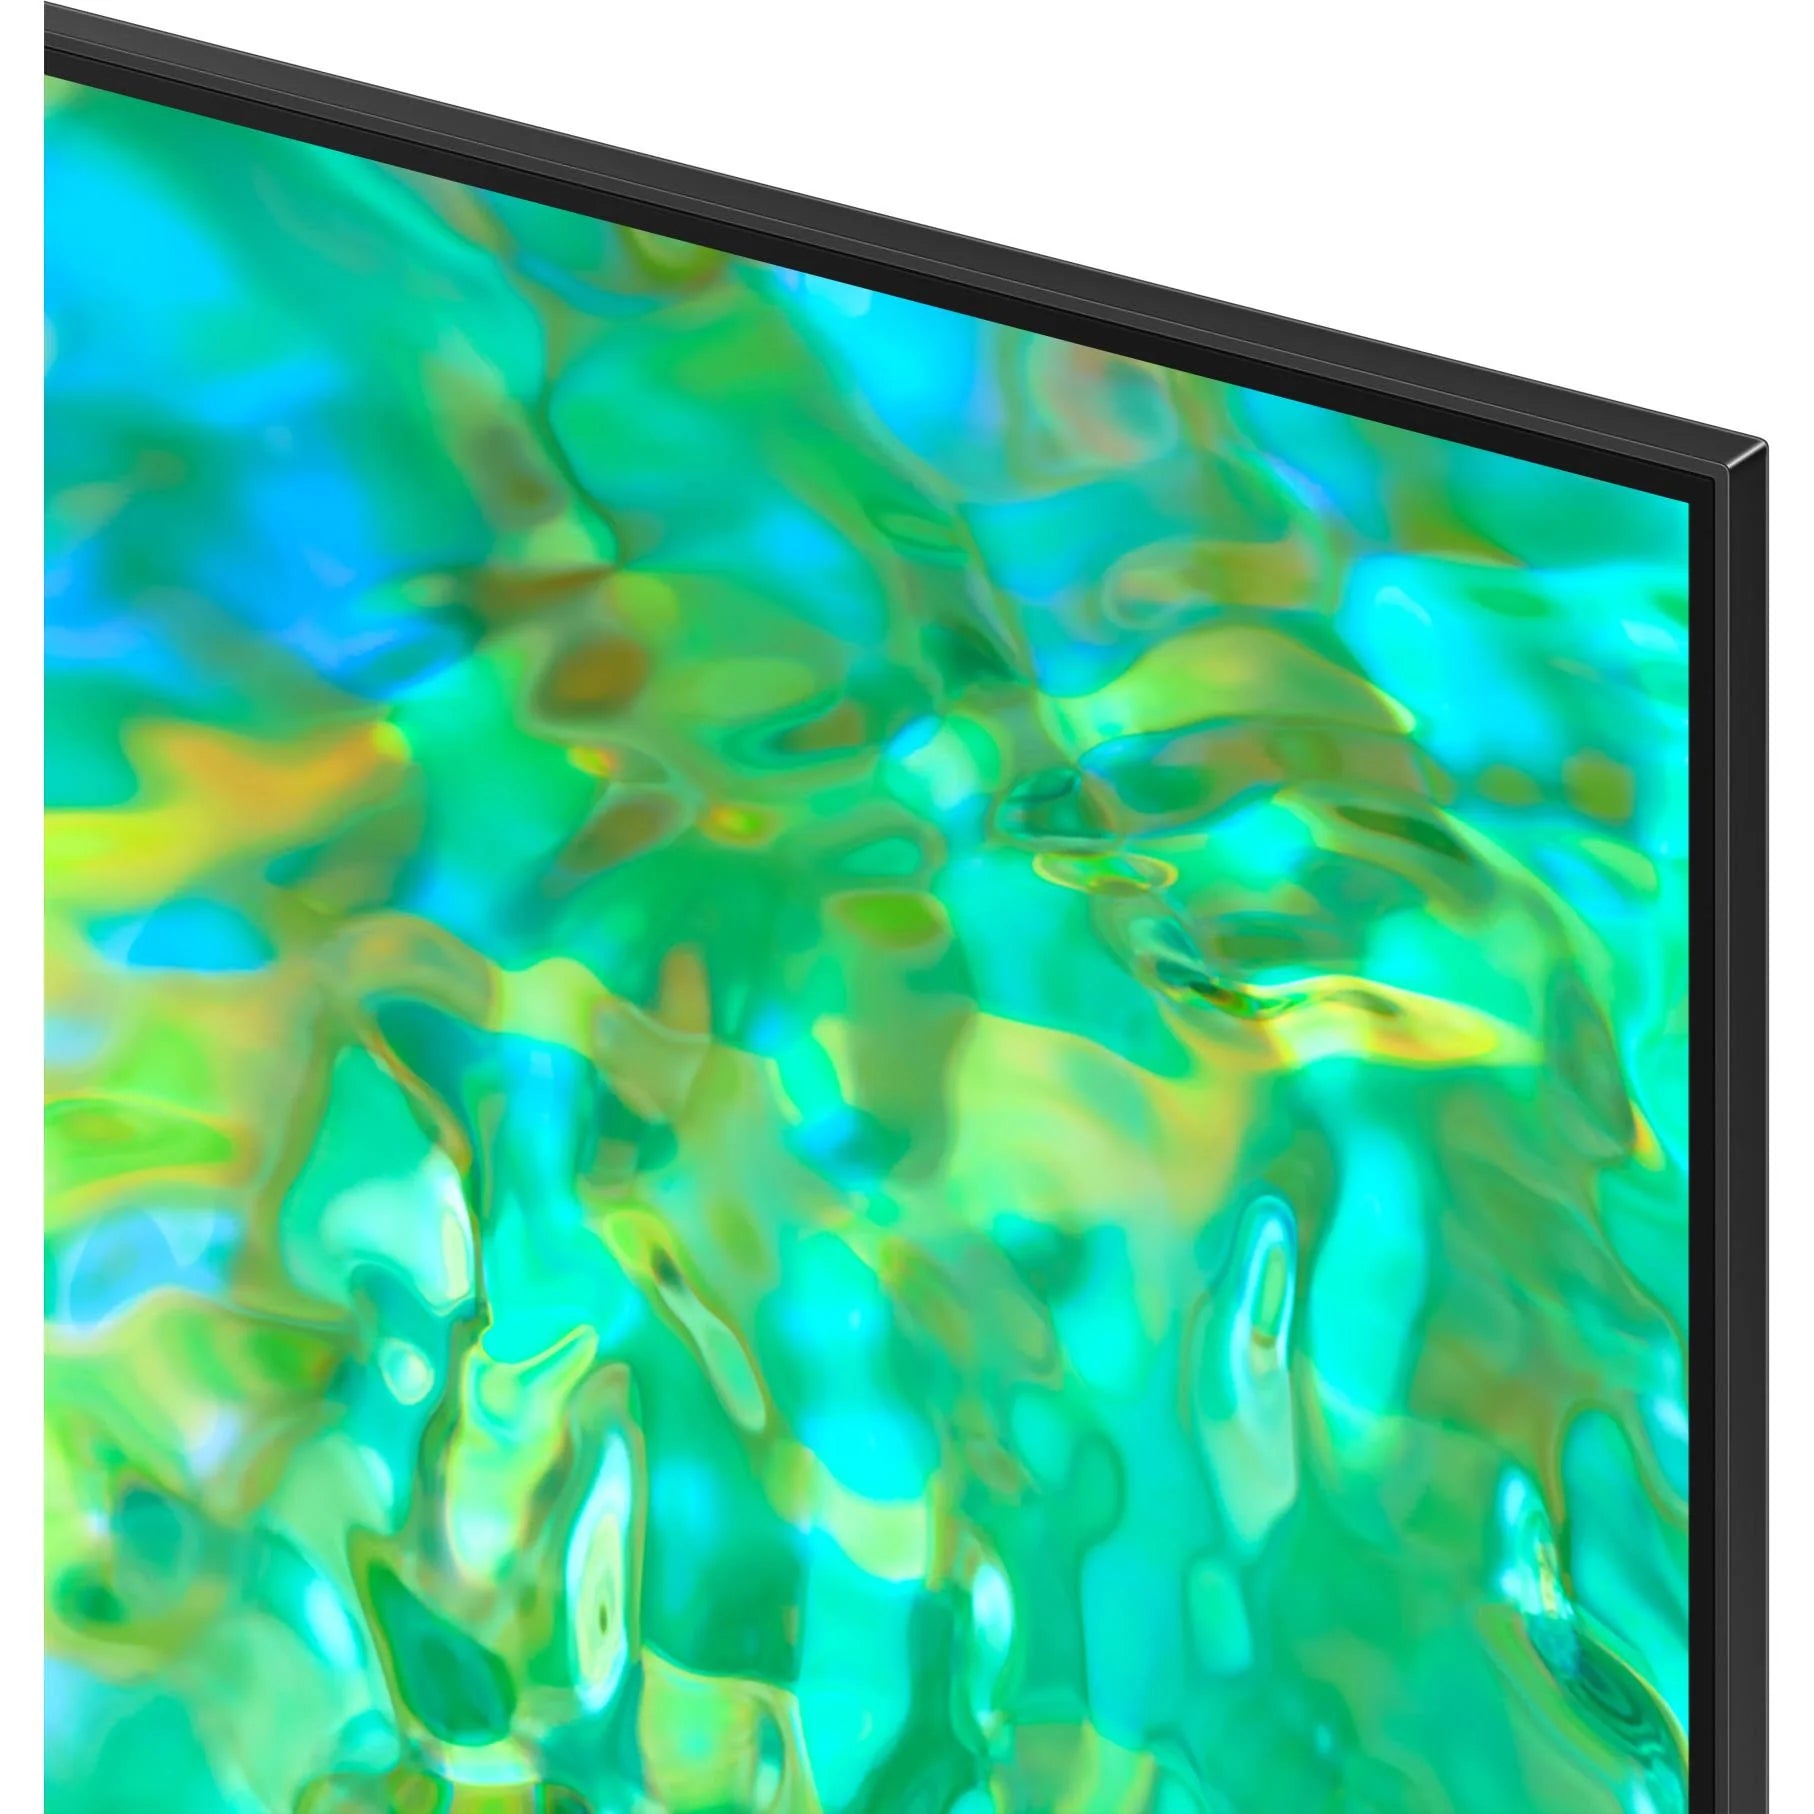 New Samsung 55" Crystal LED UHD 4K Smart TV